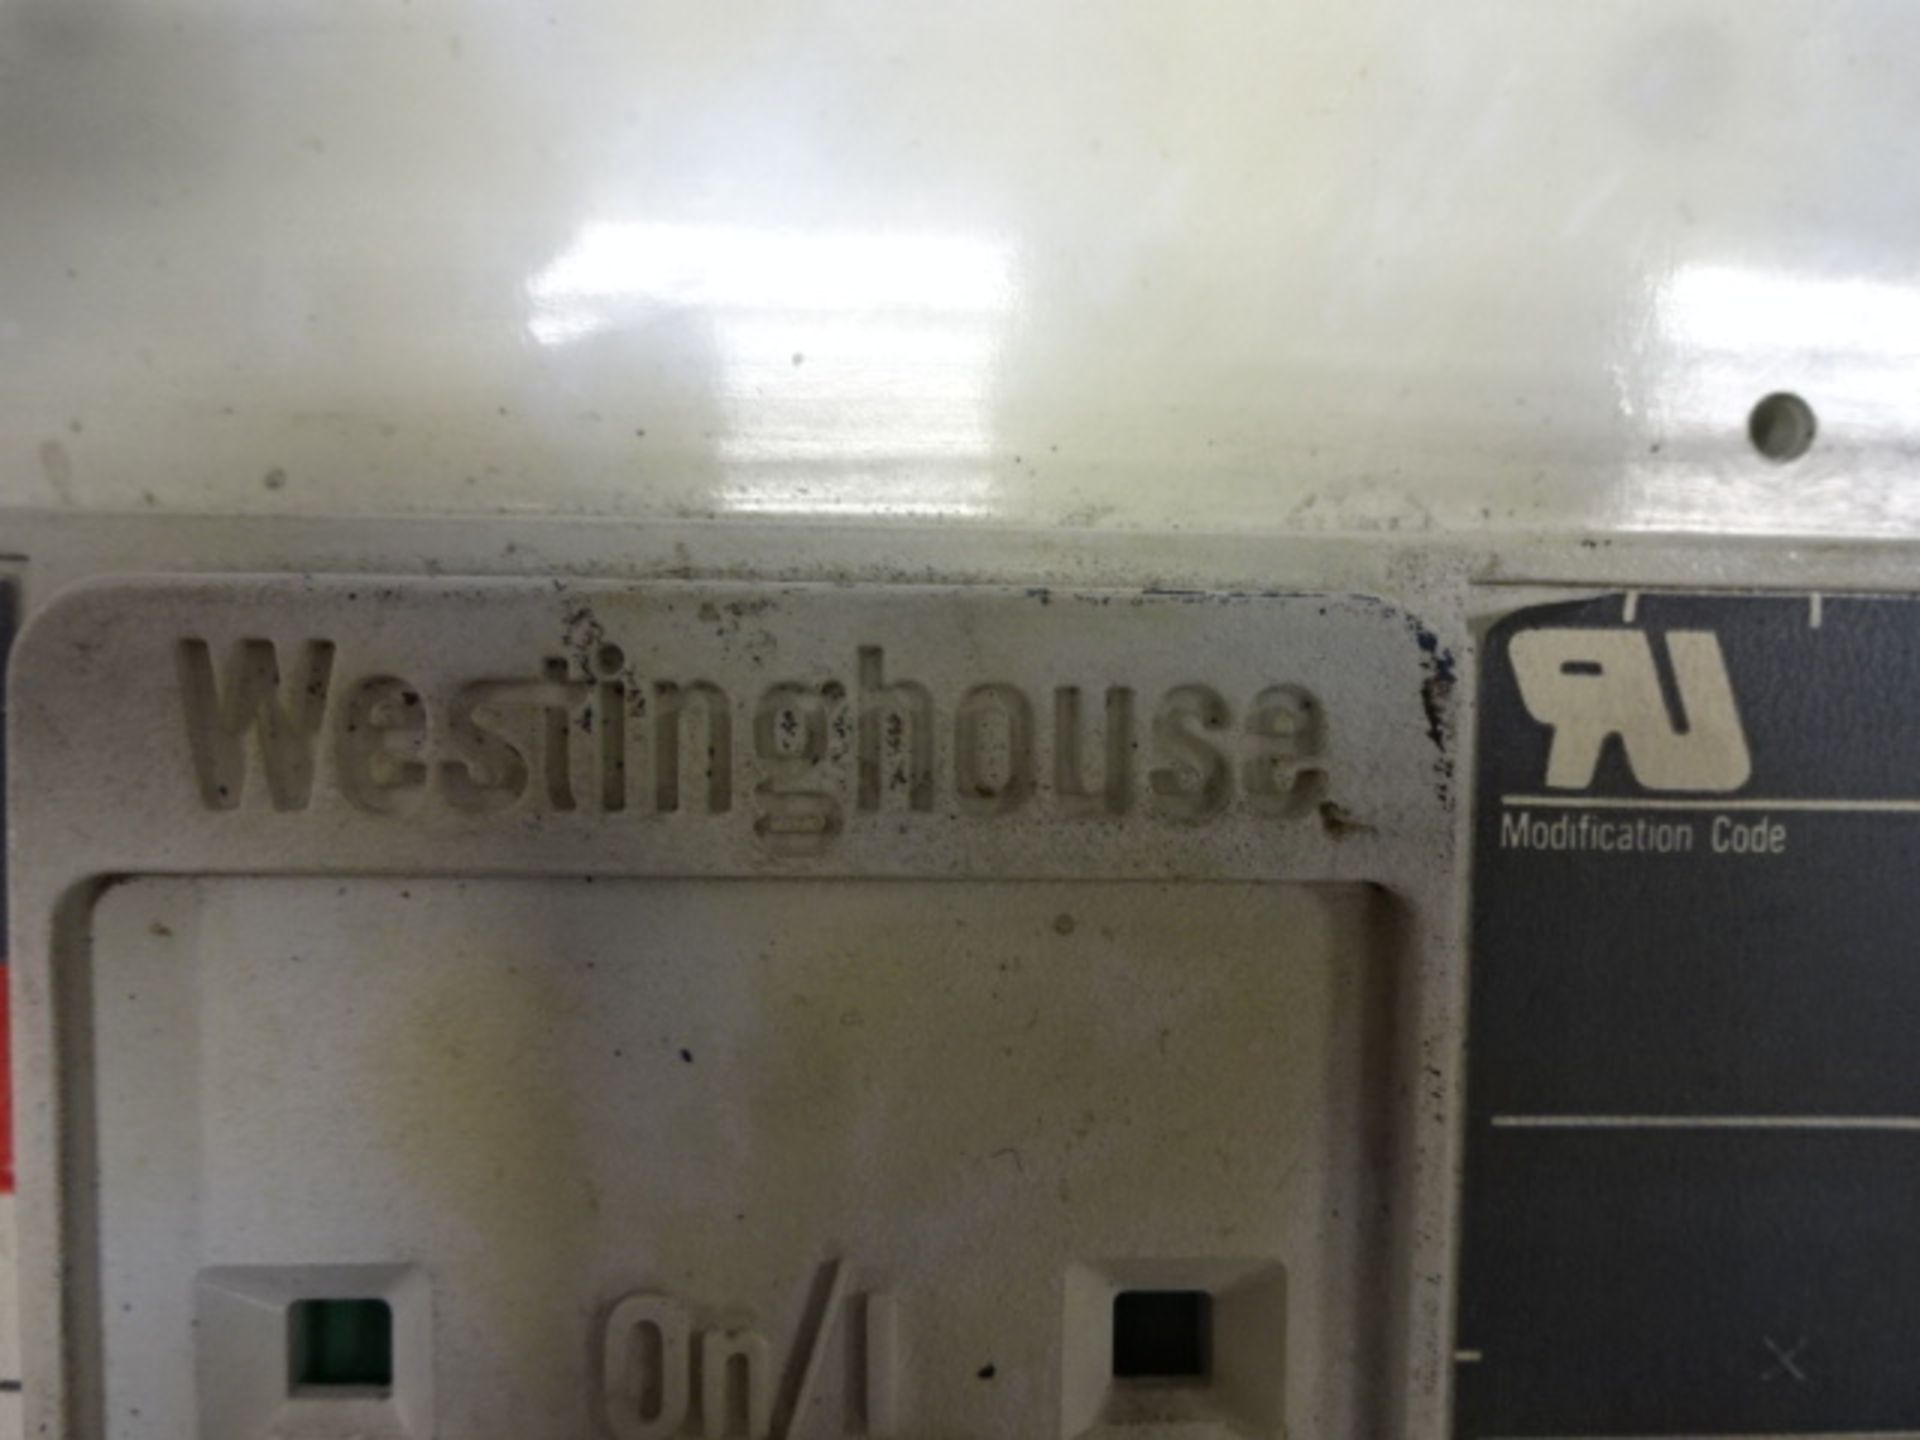 Westinghouse breaker - Image 2 of 4